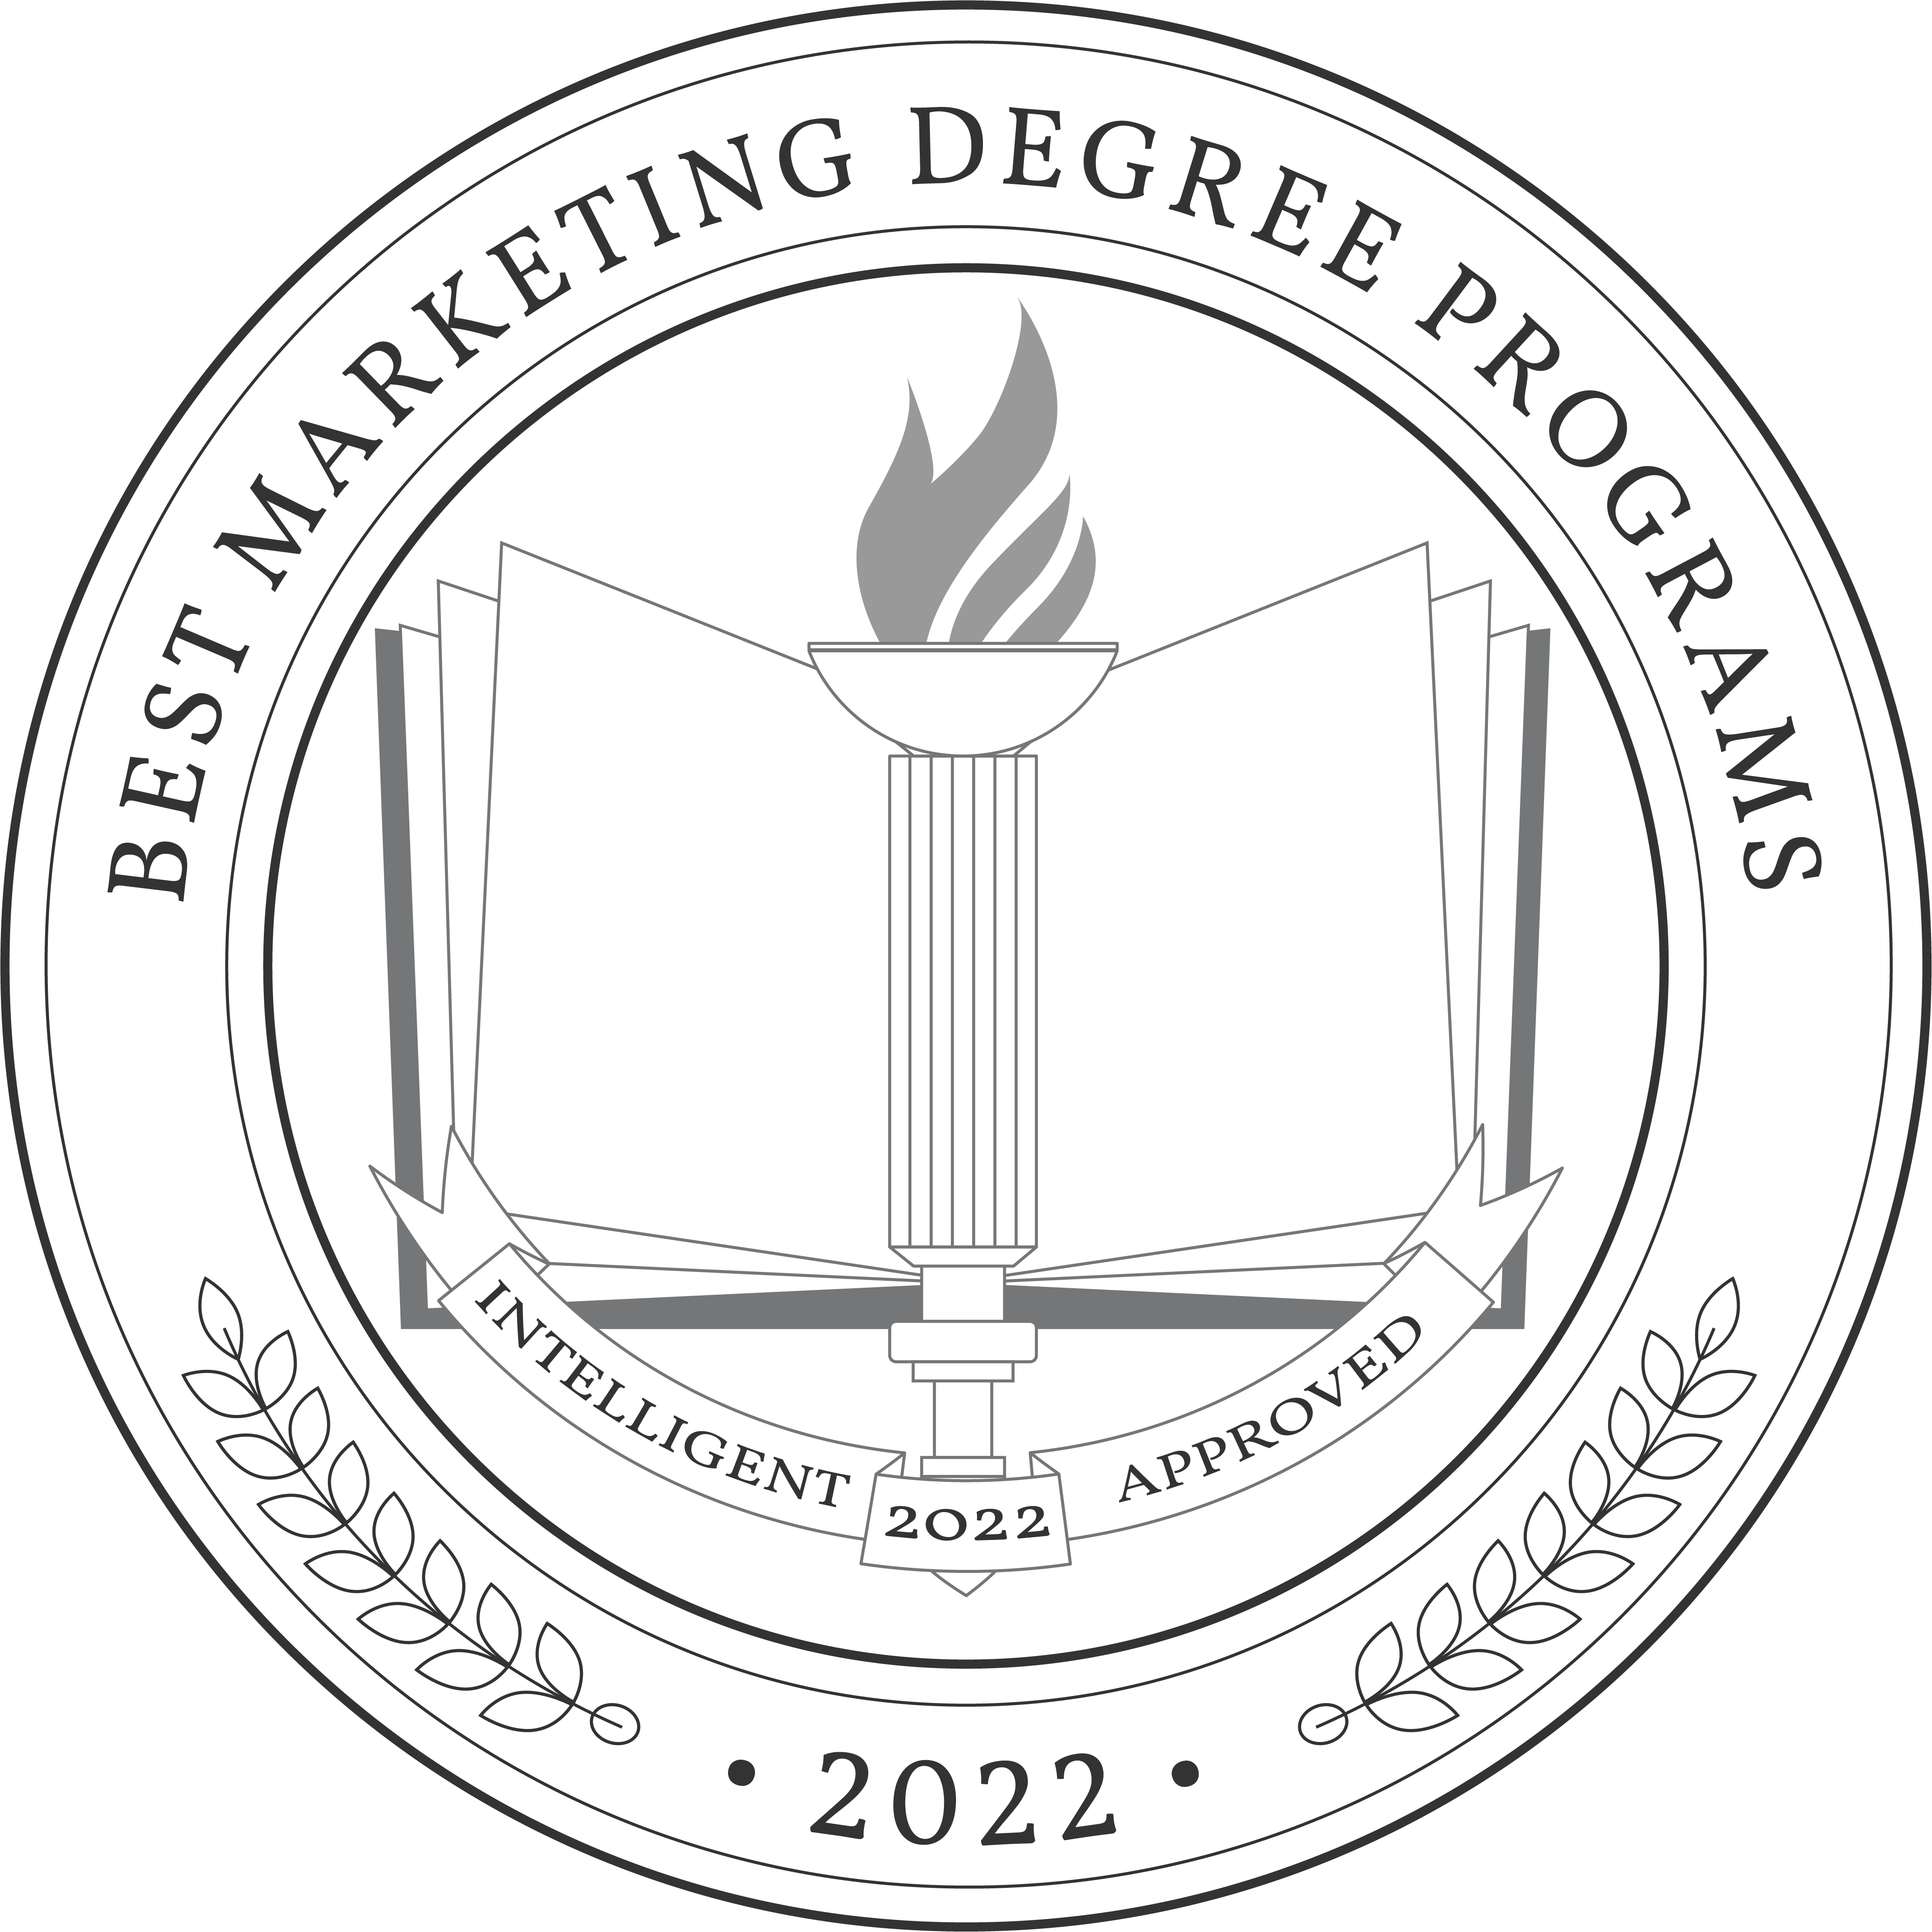 Best-Marketing-Degree-Programs-Badge.png